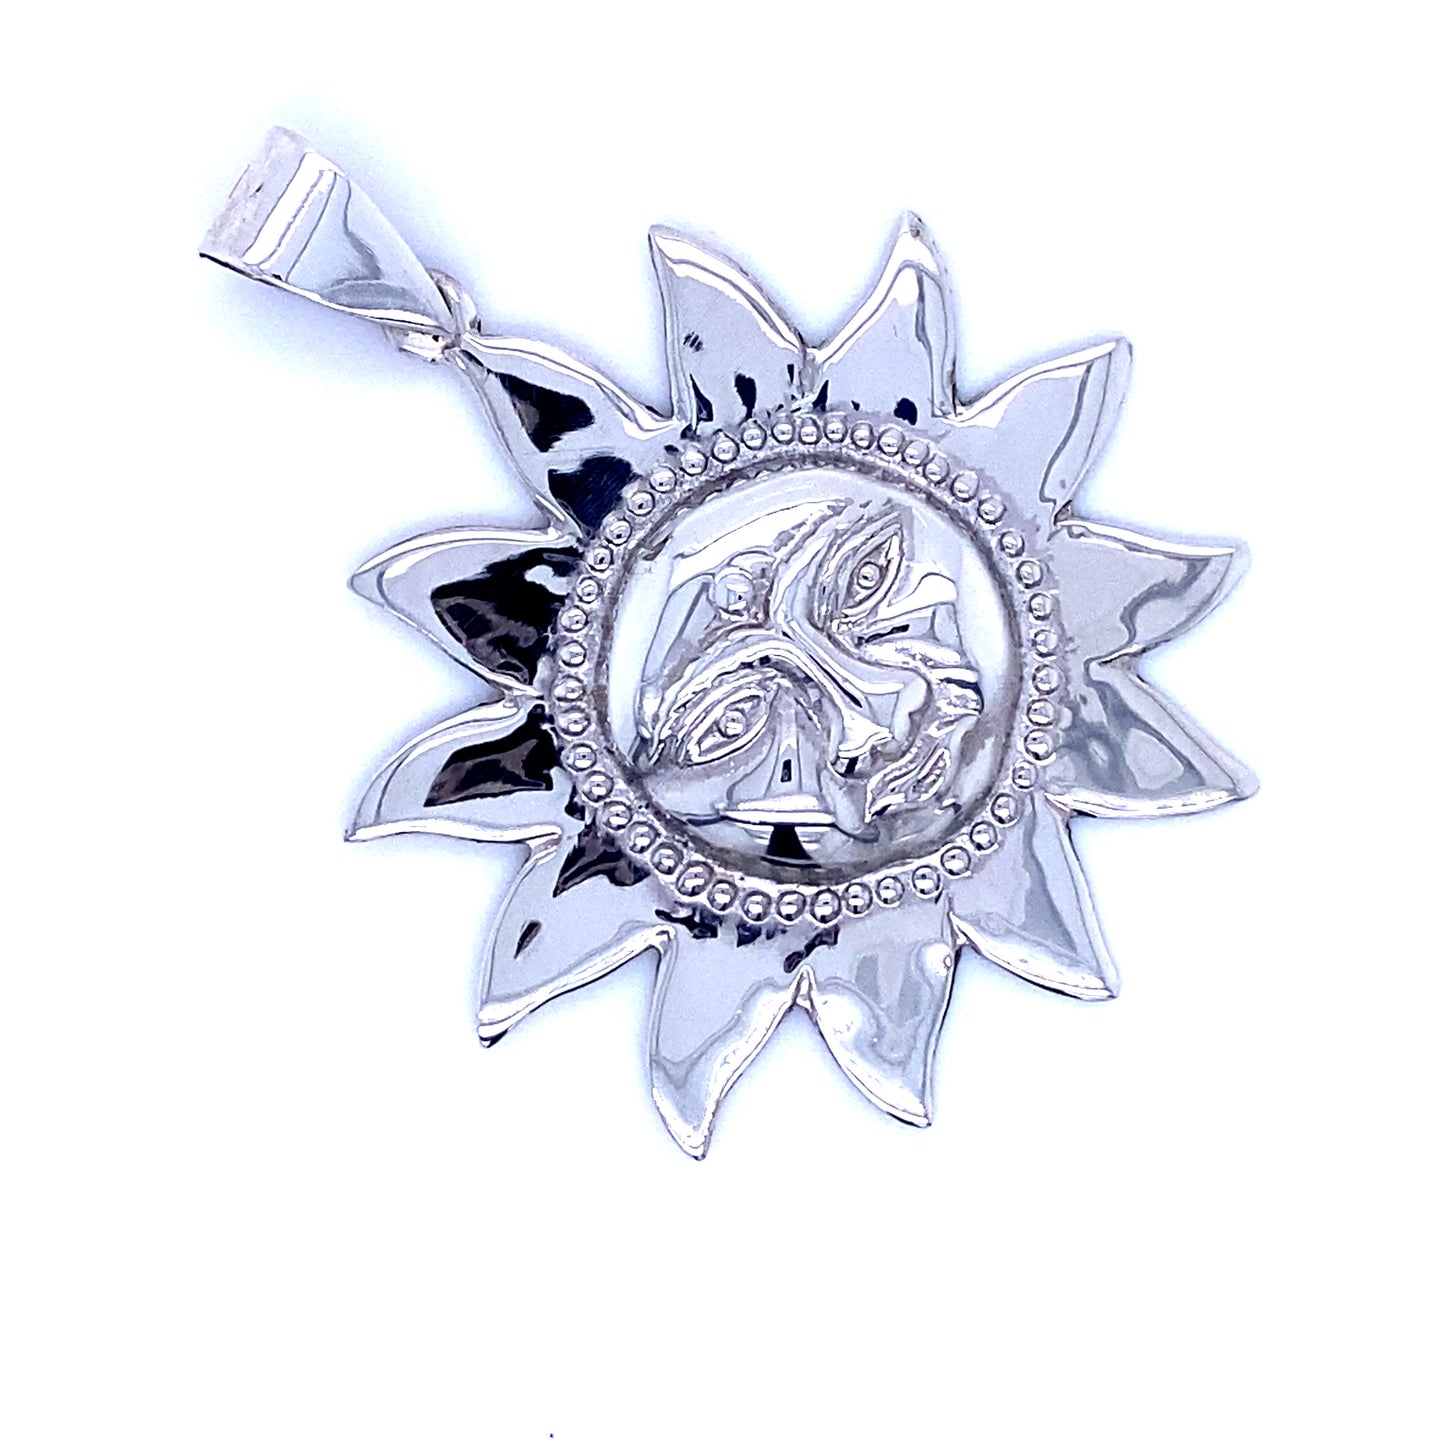 A Super Silver Sun God Pendant with diamonds on it, representing the Hindu Sun God.